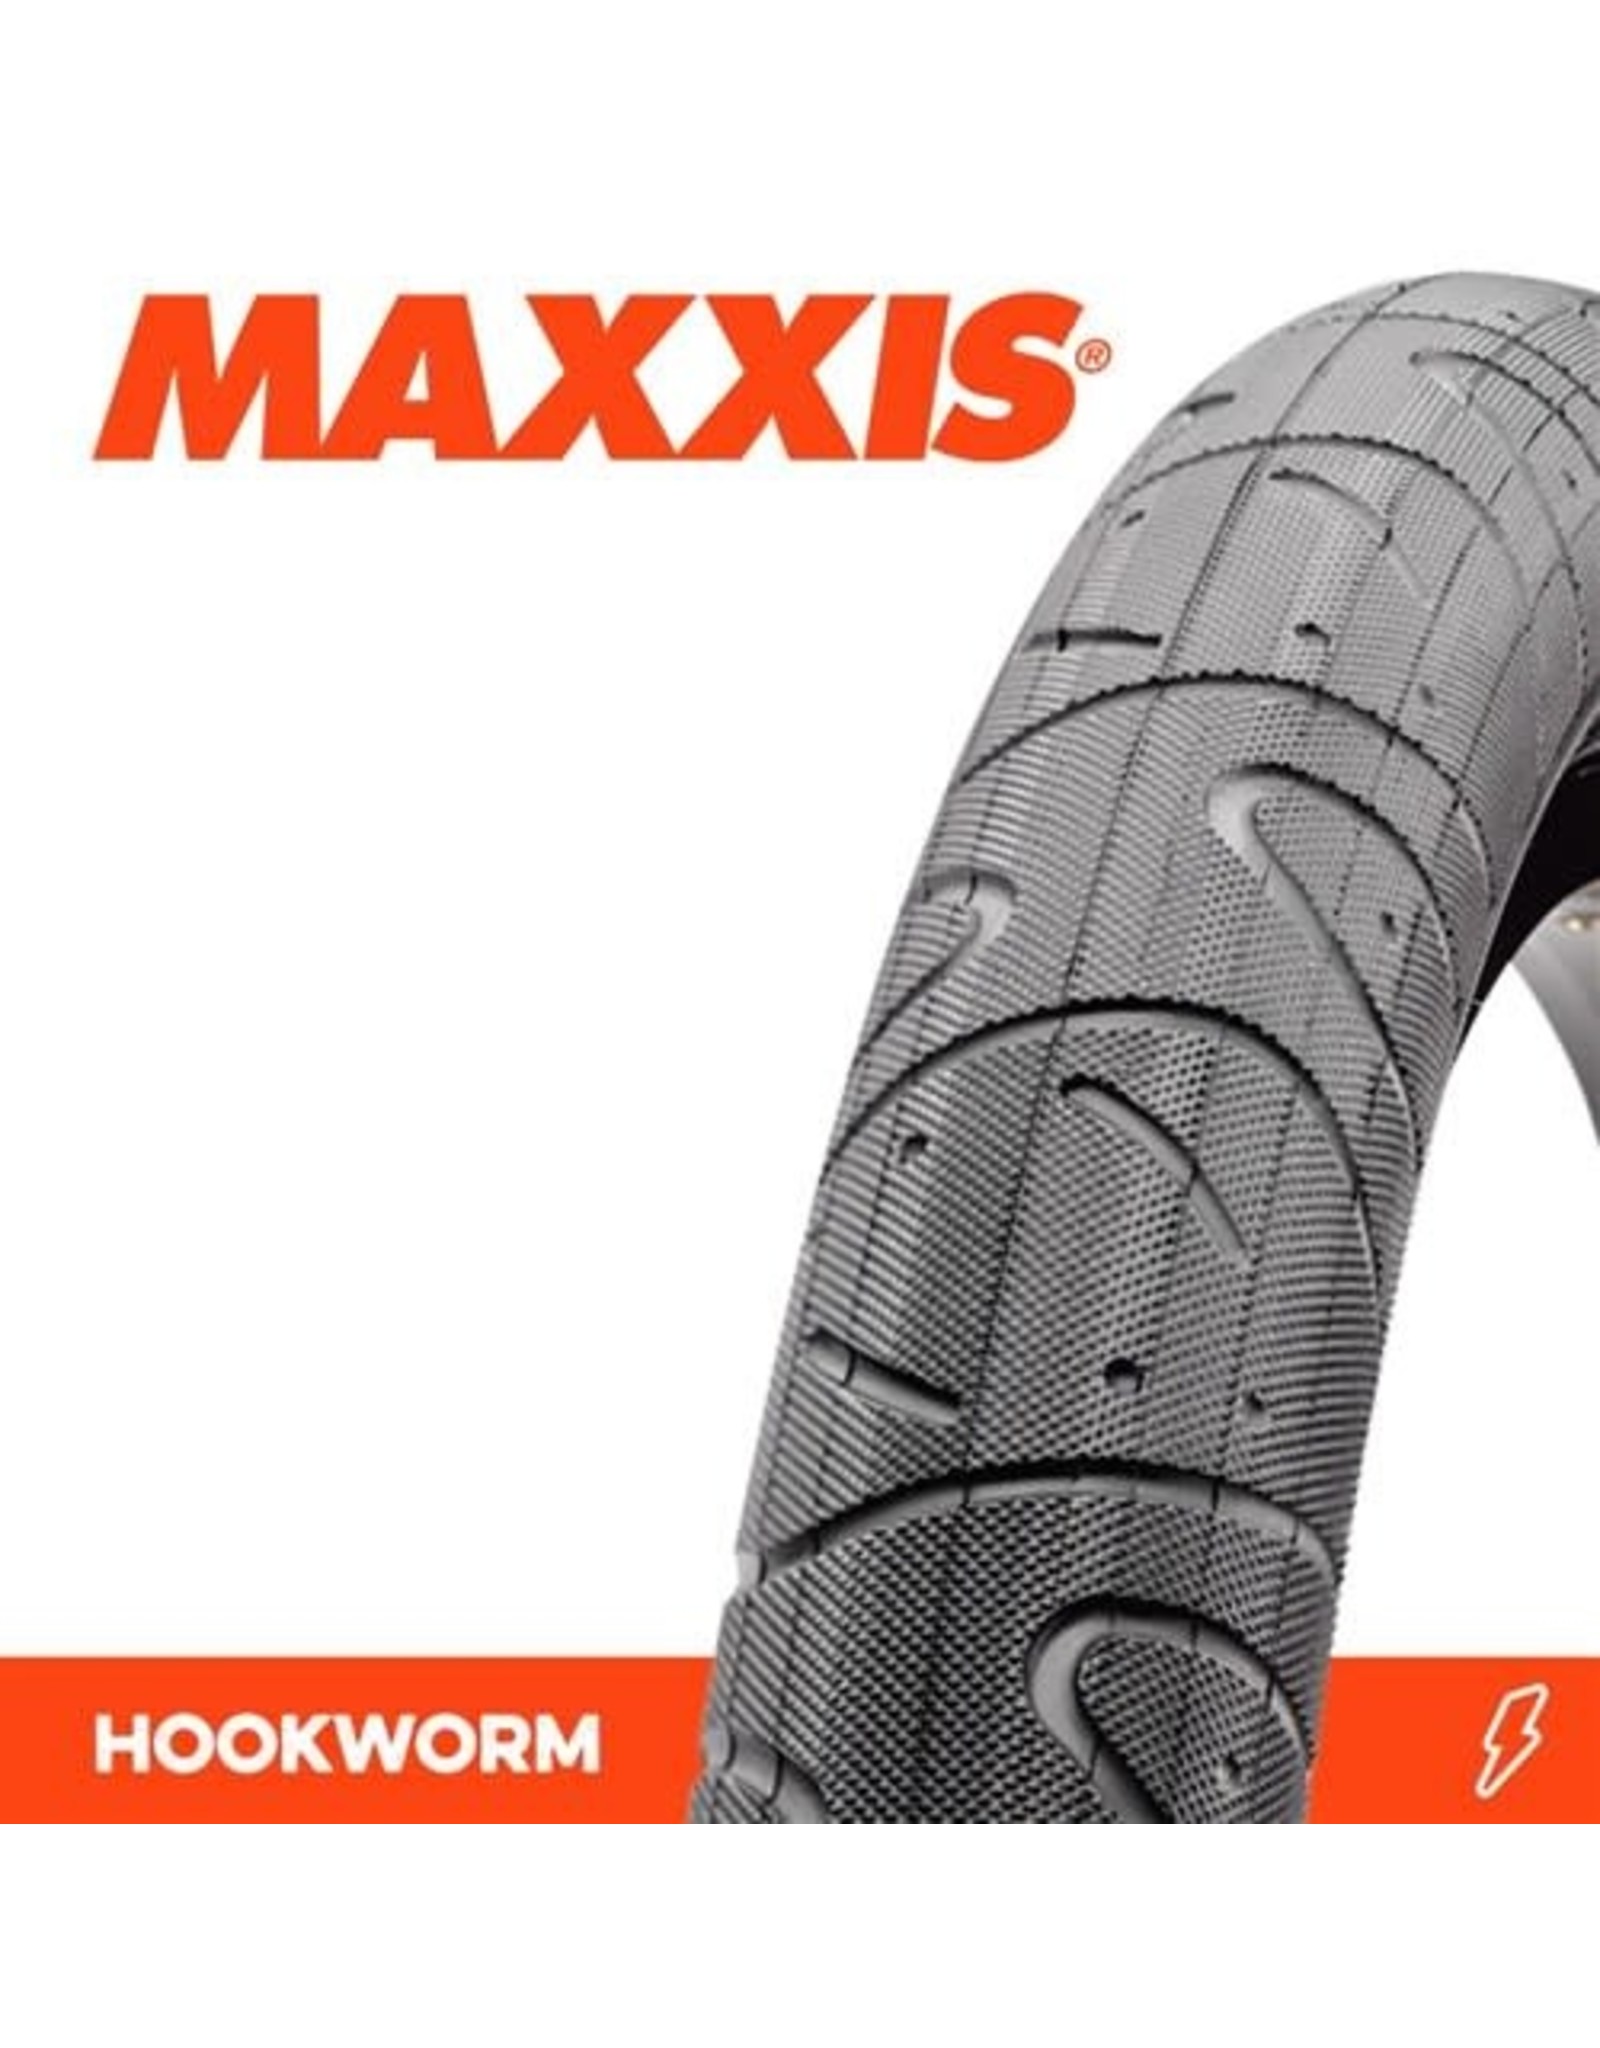 Gios 2.0 Única no Brasil com os Maxxis hookworm 29 ❤️🙅🏾‍♂️ #graudebi, maxxis hookworm